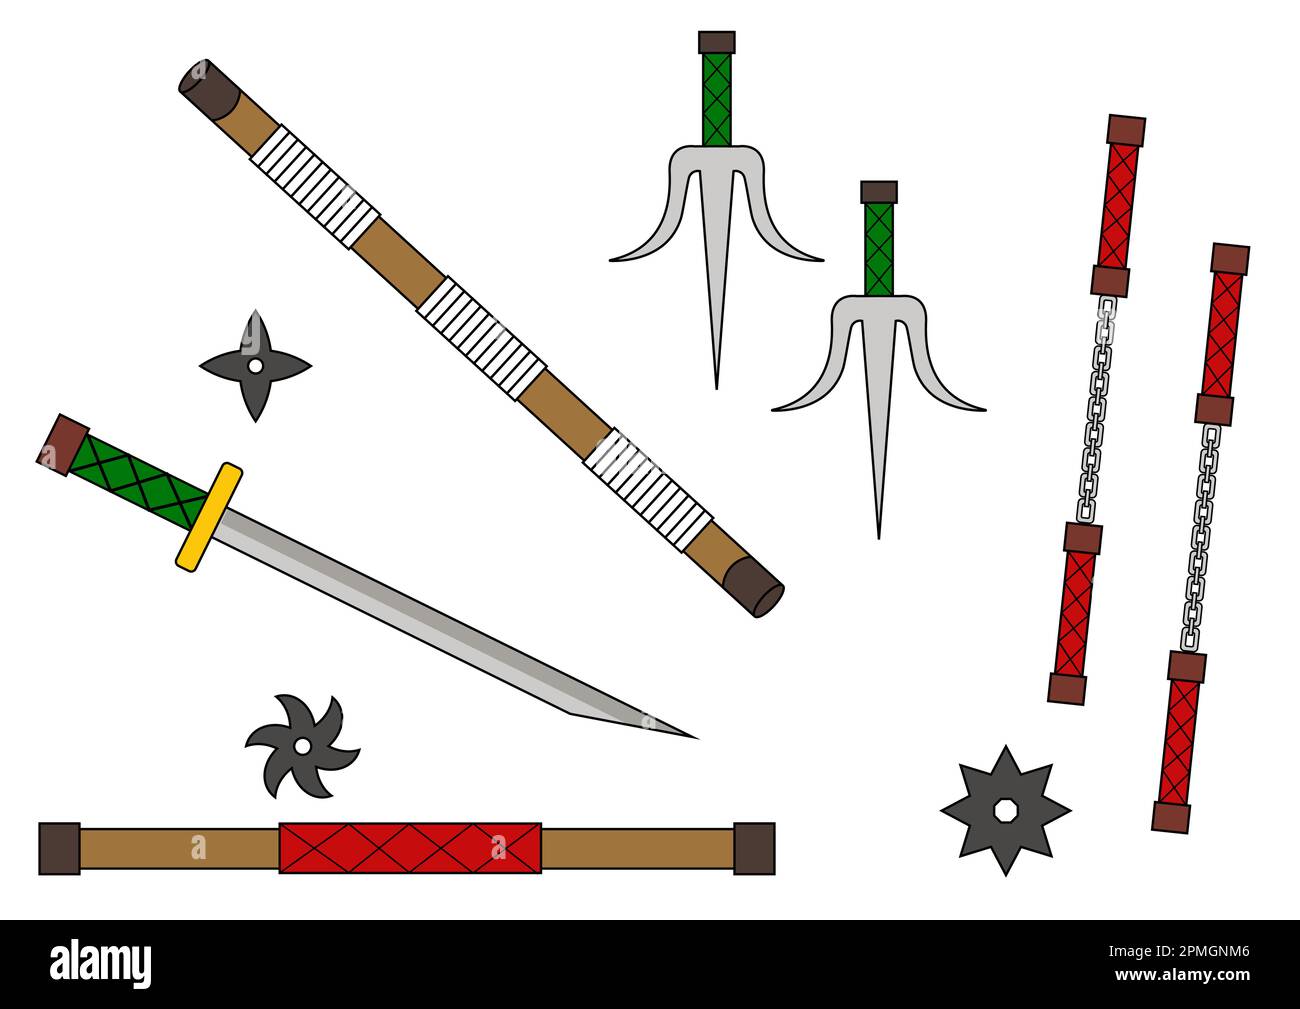 Katana espada ninja arma guerrero japonés asesino vector ilustración